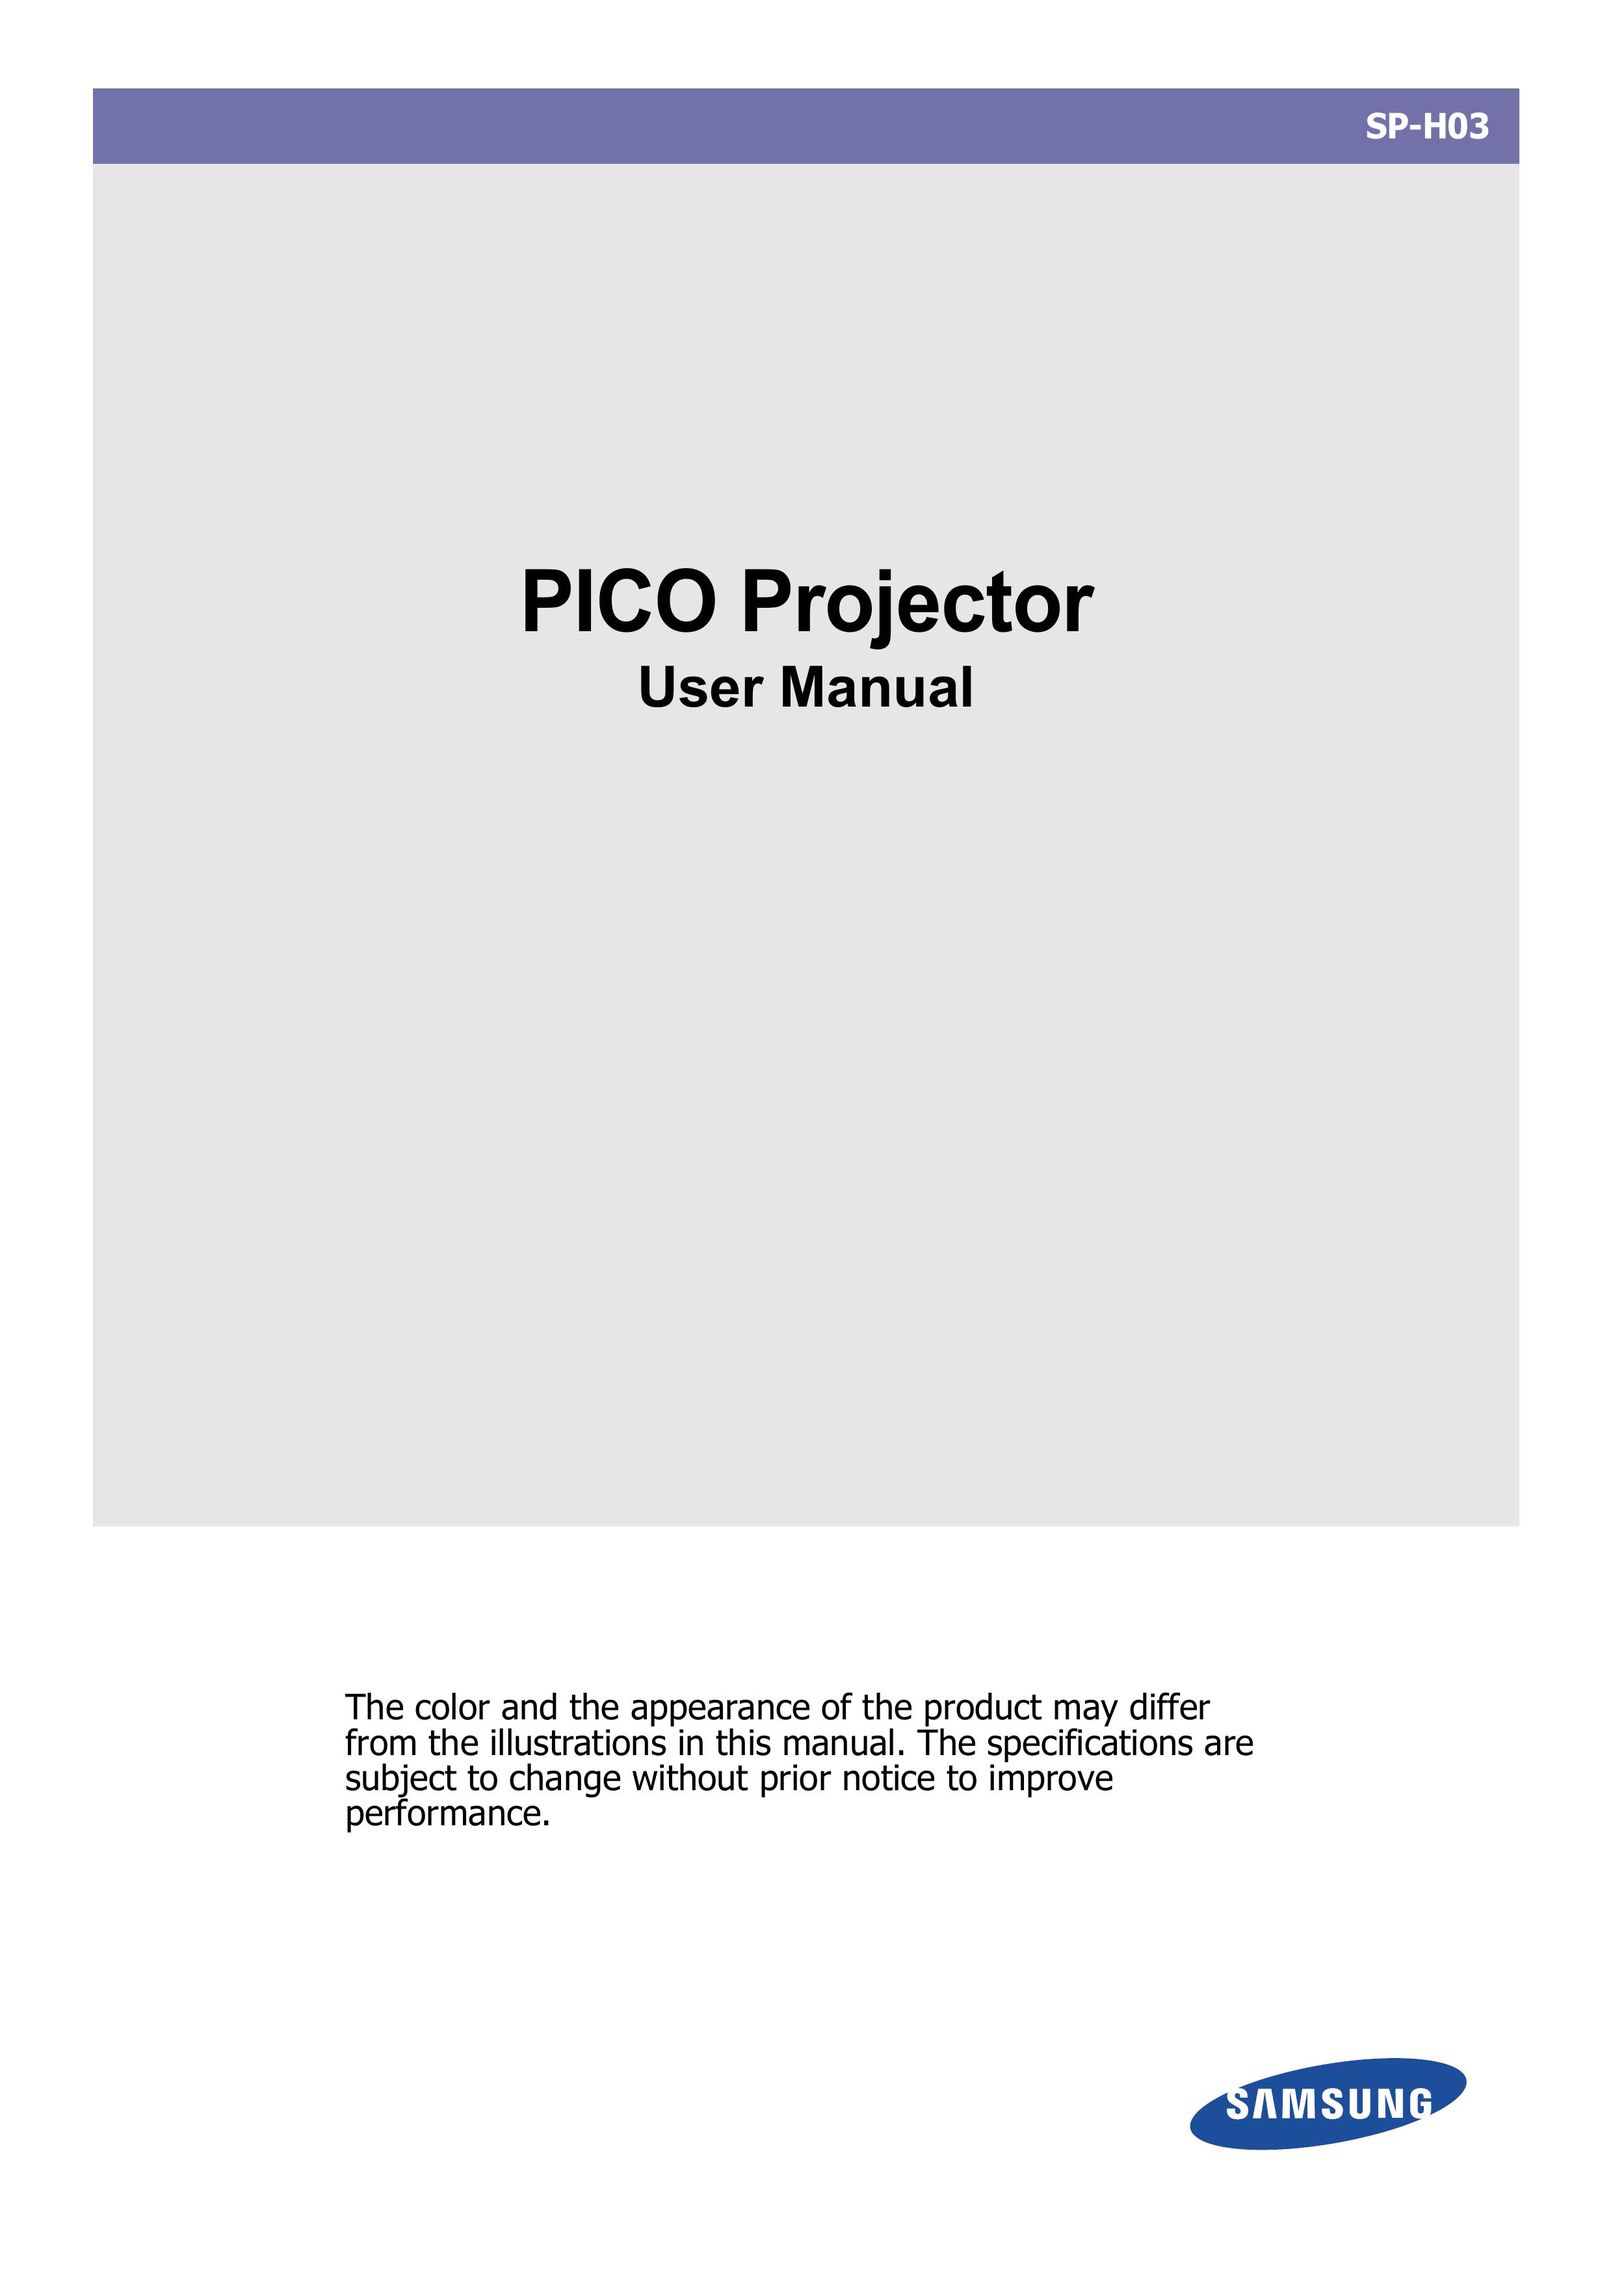 Samsung BP59-00143A-04 Projector User Manual